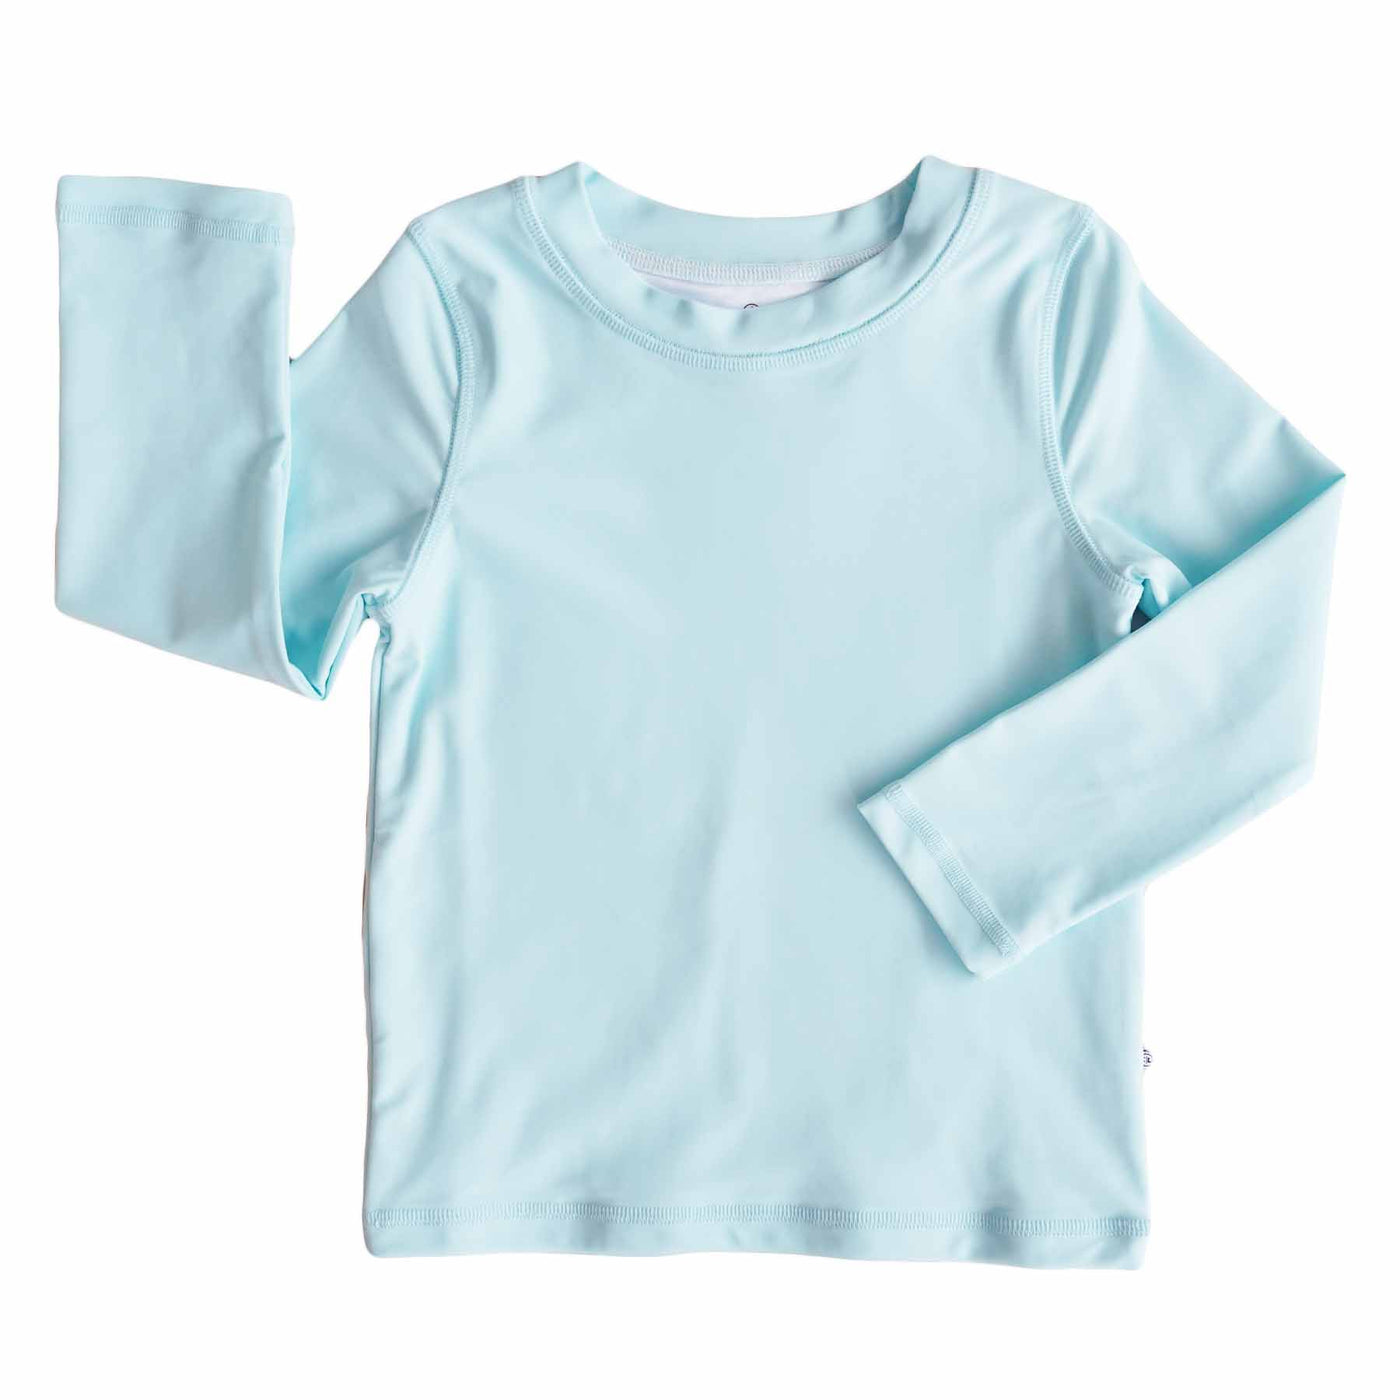 pastel blue rash guard shirt for boys